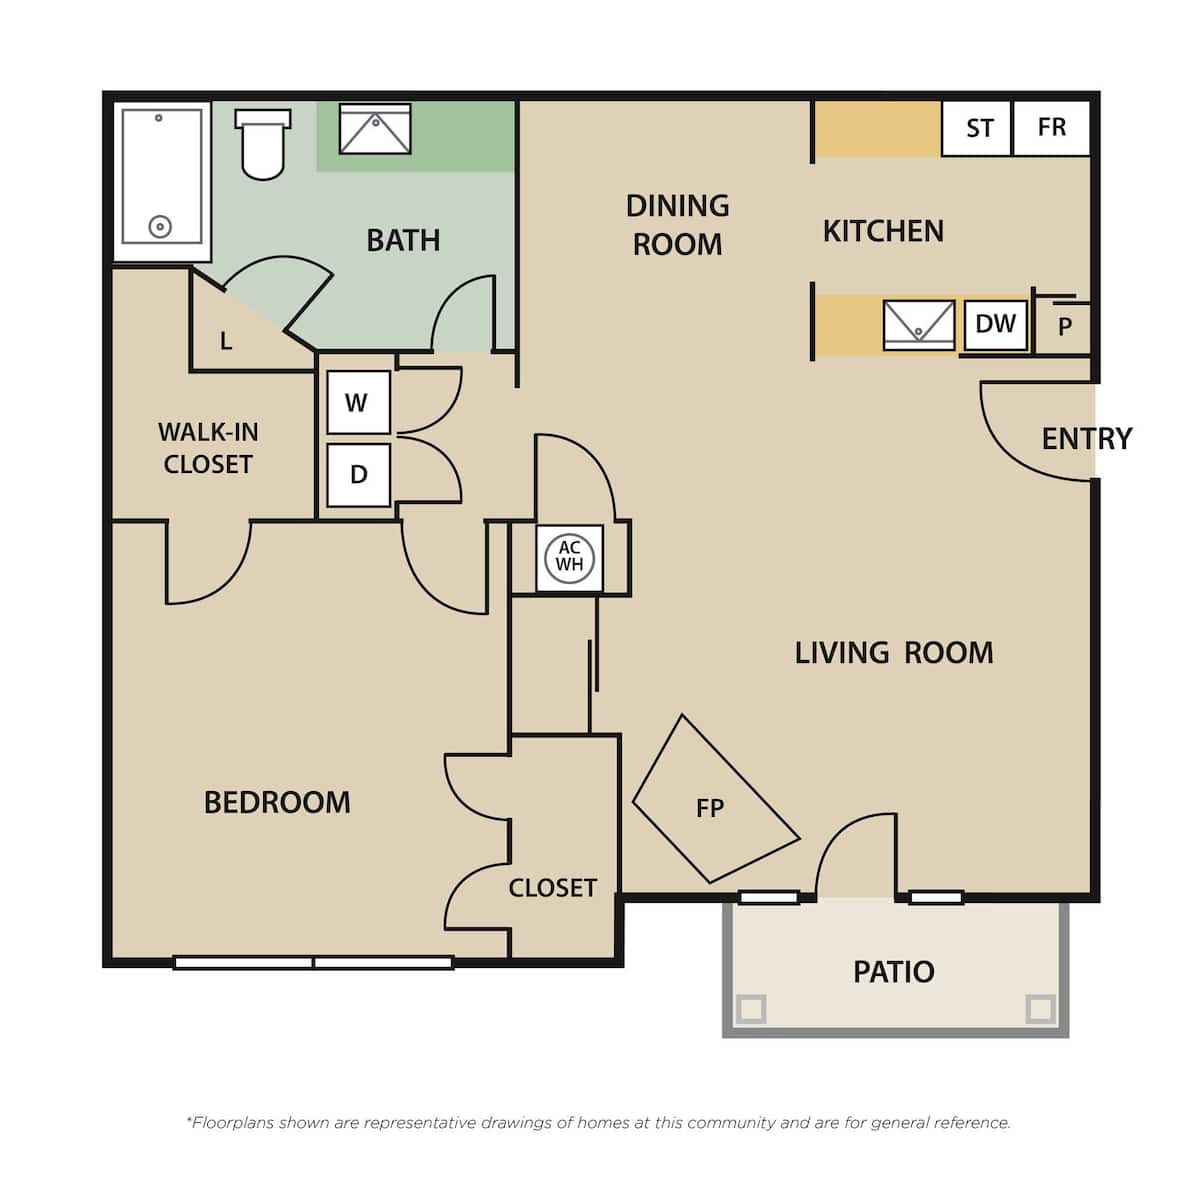 Floorplan diagram for PARK A4, showing 1 bedroom